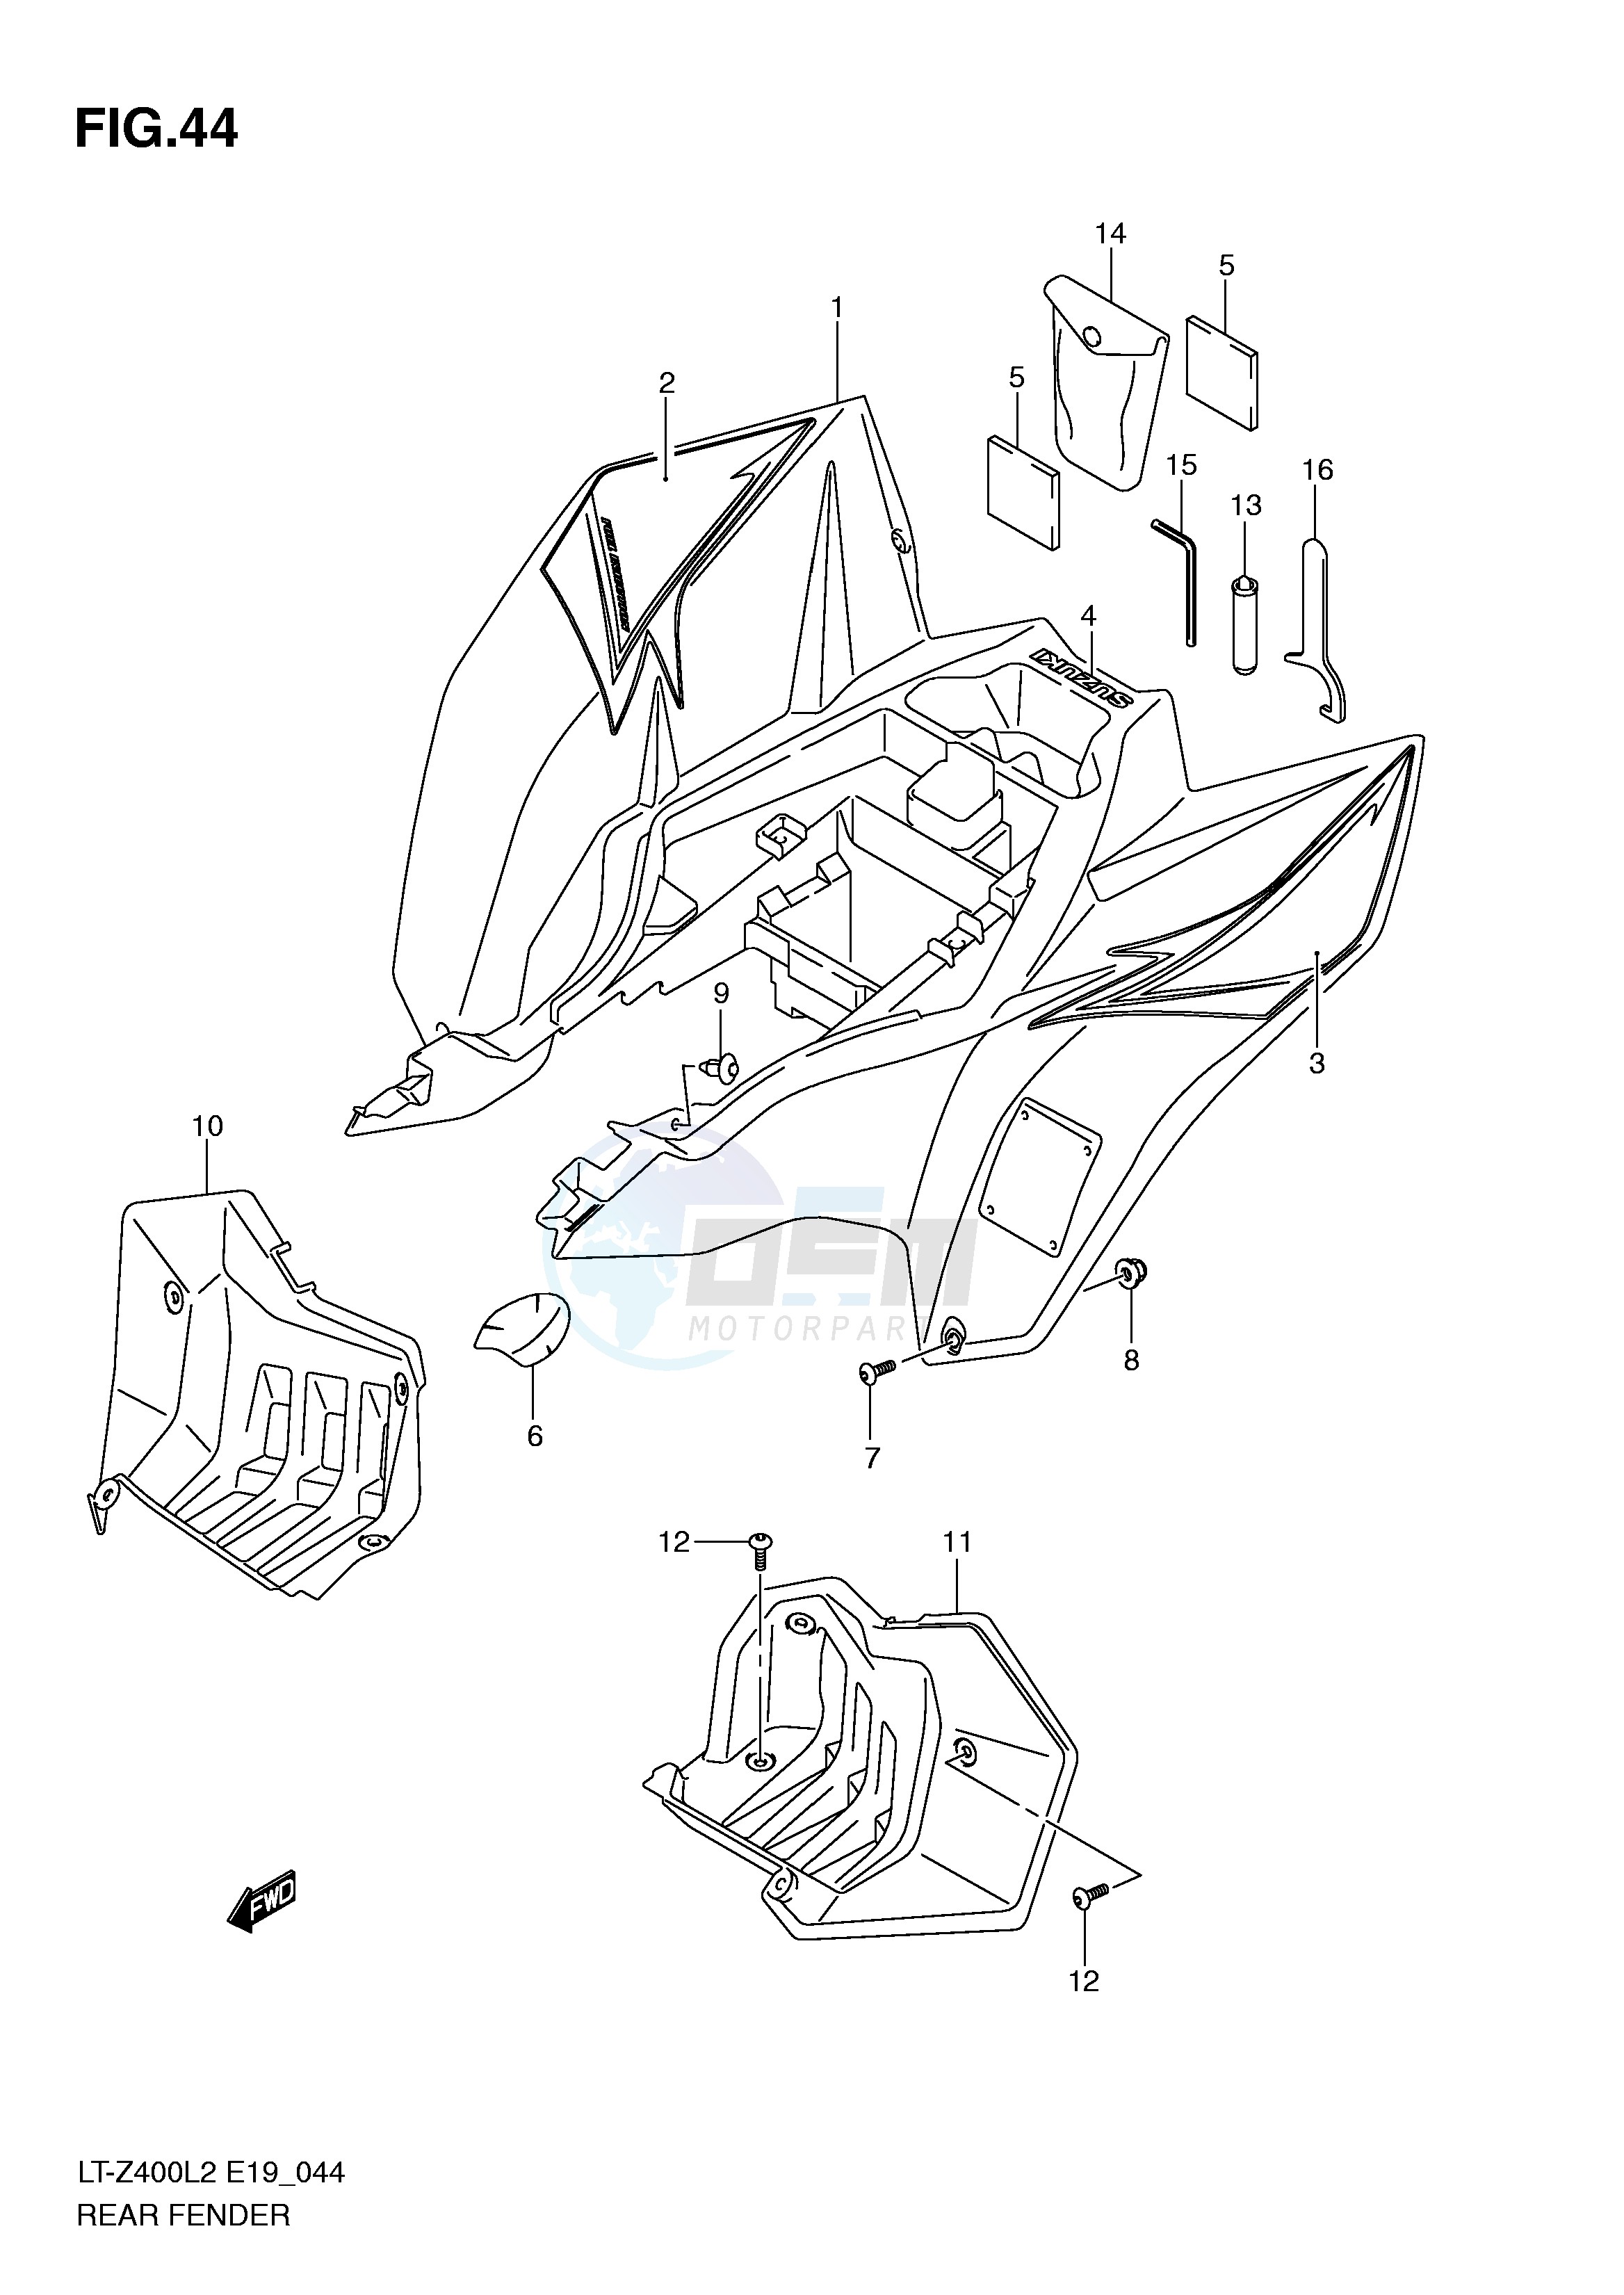 REAR FENDER (LT-Z400L2 E19) blueprint